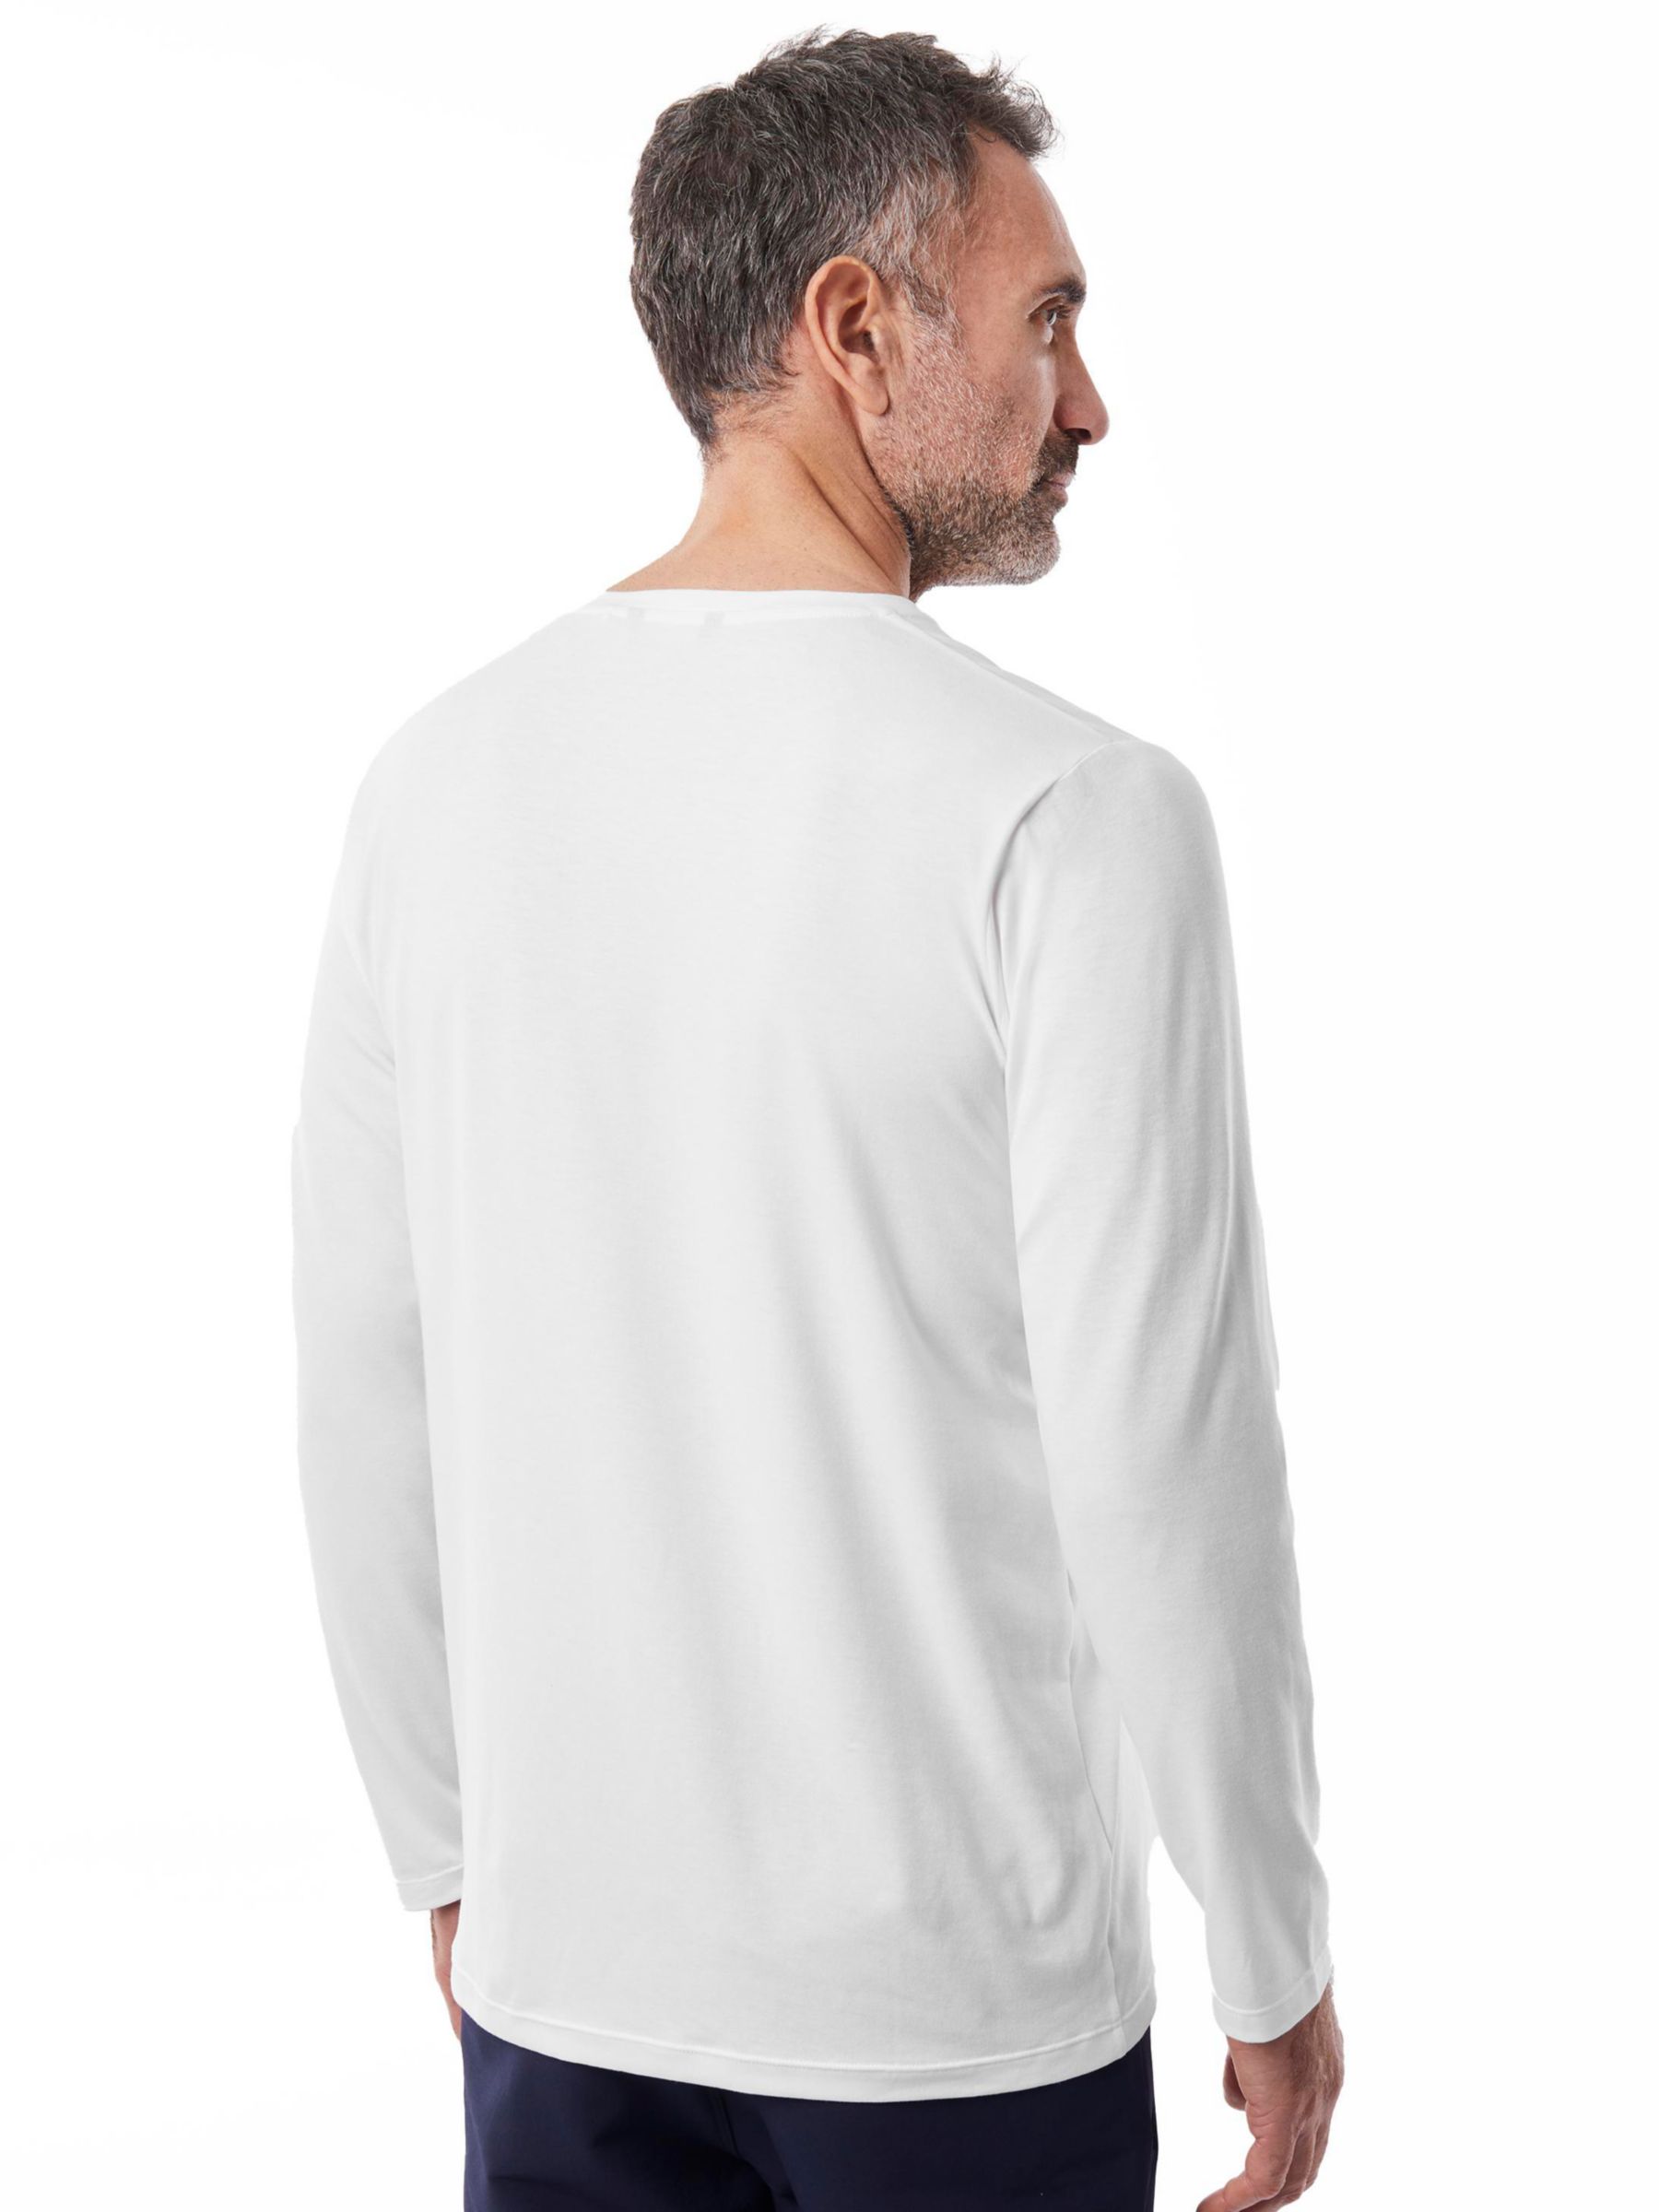 Rohan Basis Long Sleeve T-shirt, White, S